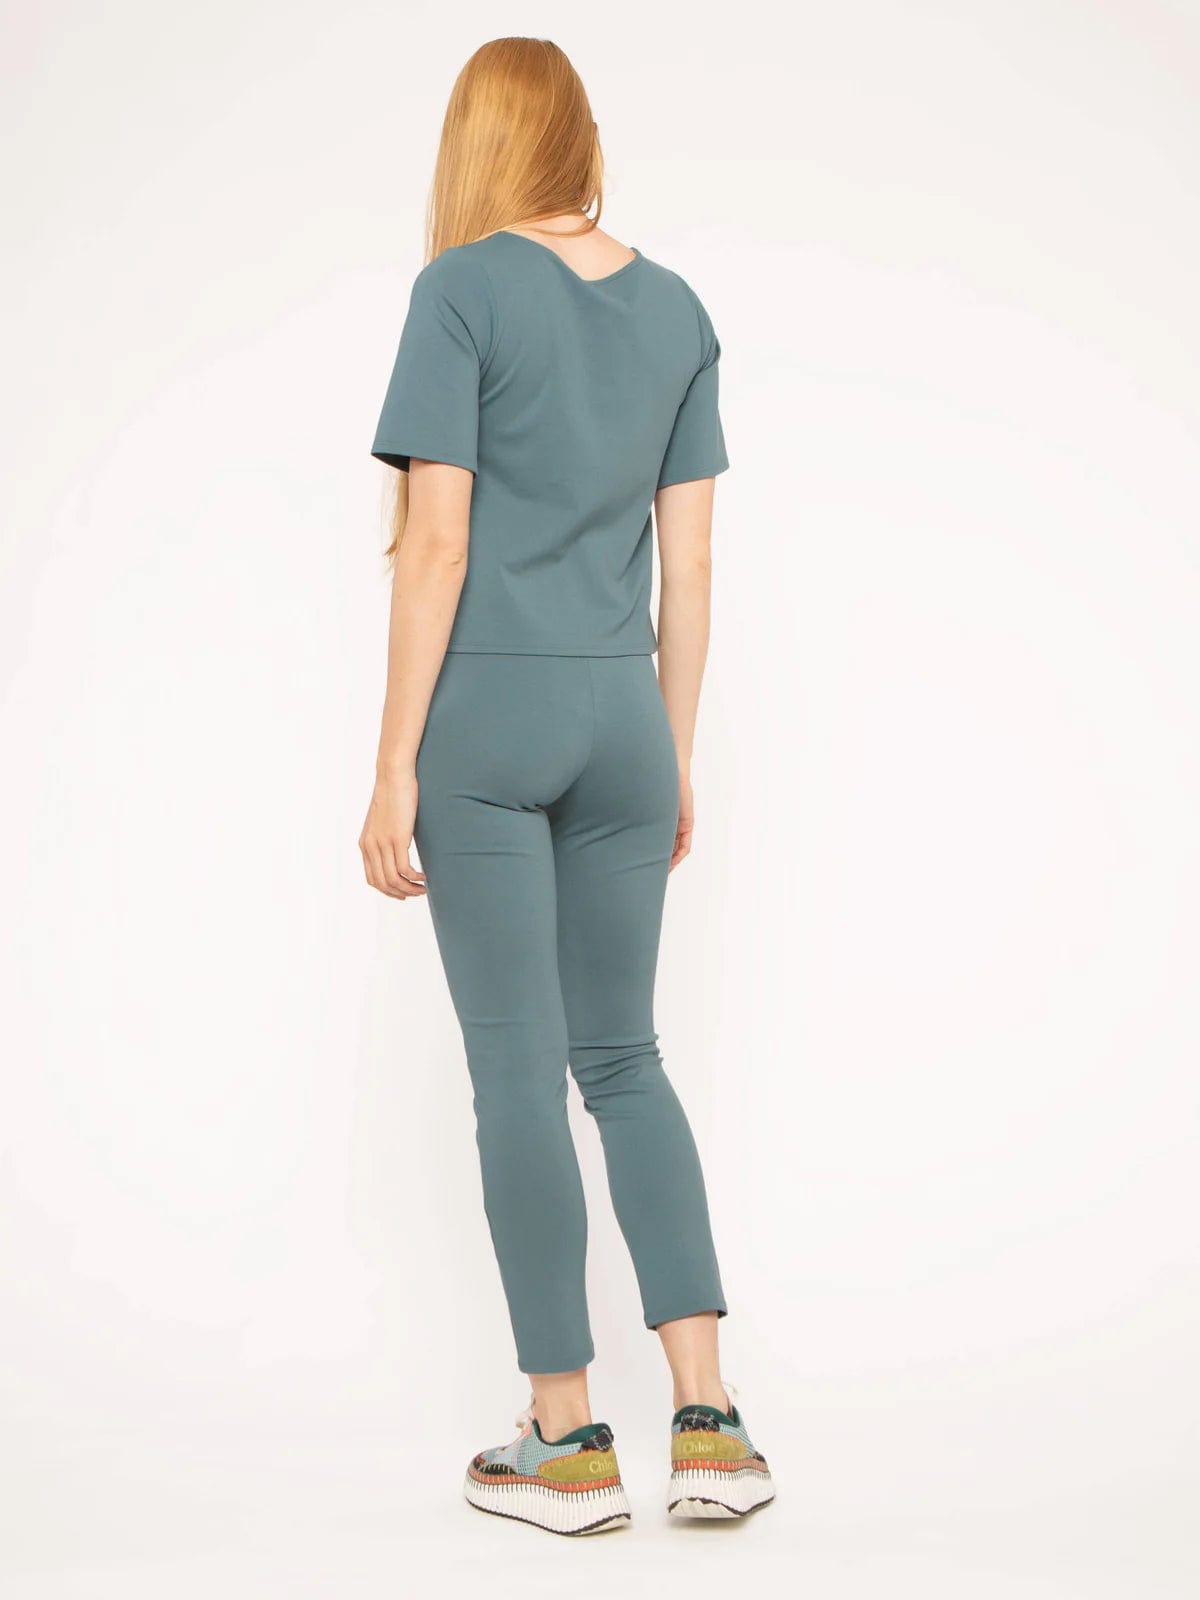 Ripley Rader Women's Shirts & Tops Ripley Rader Ponte Knit Short Sleeve Top Extended